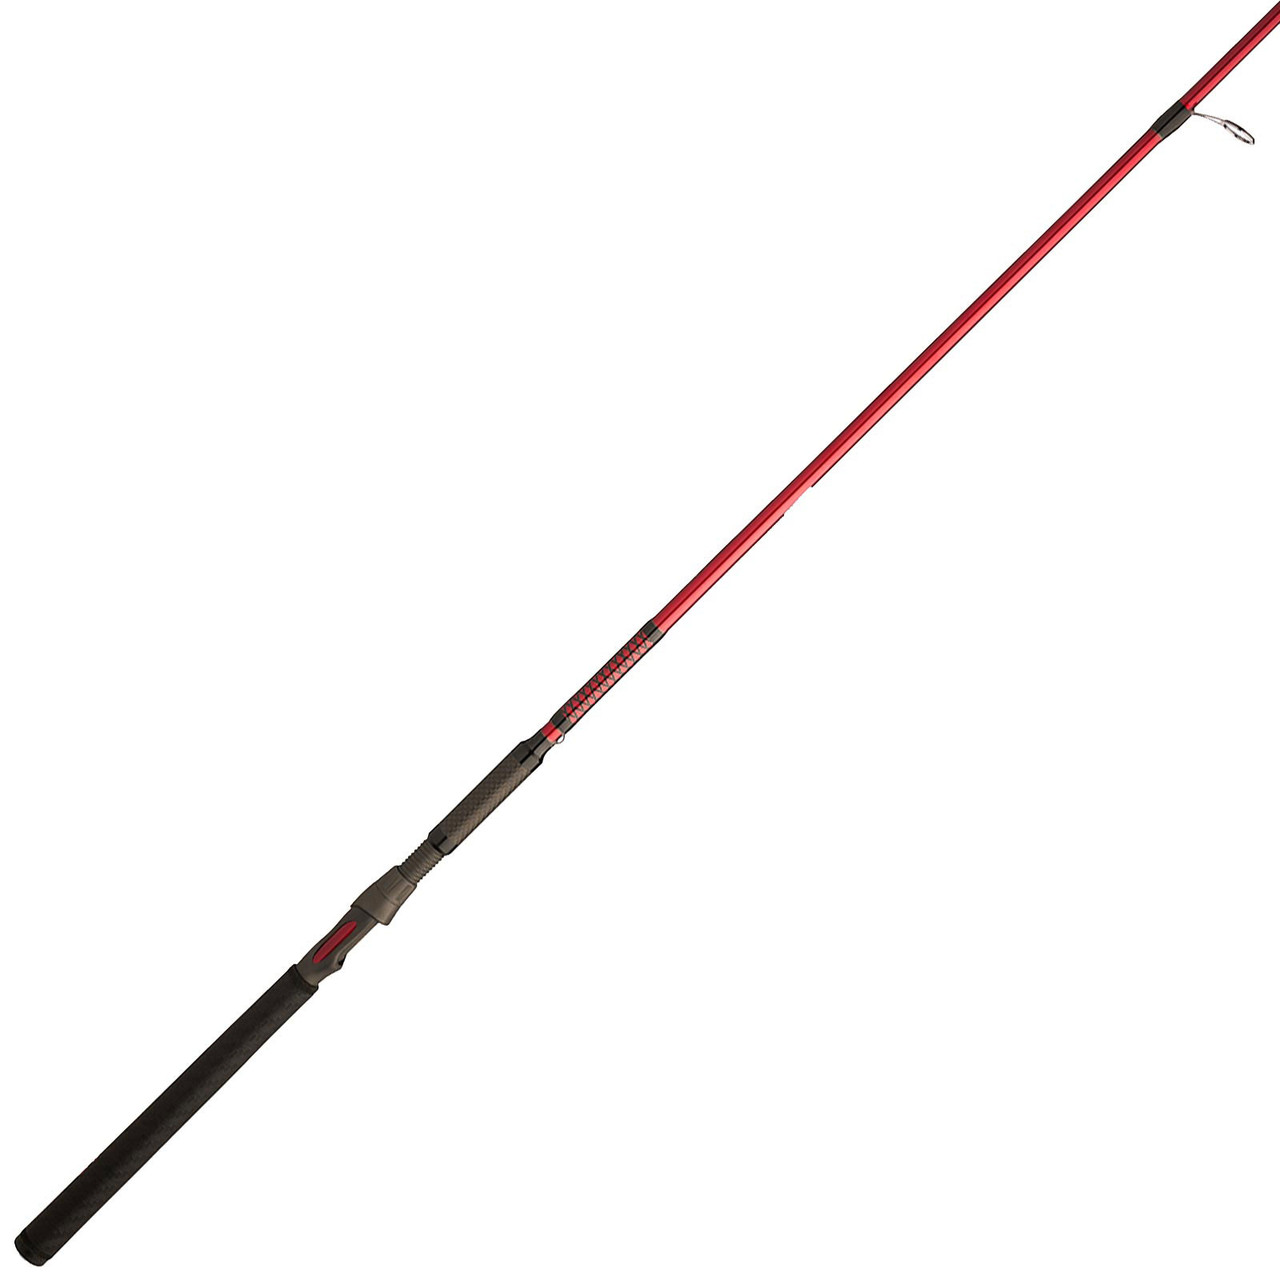 Lamiglas X-11 Salmon/Steelhead Spin Rod, 2 Piece, with Graphite Handle